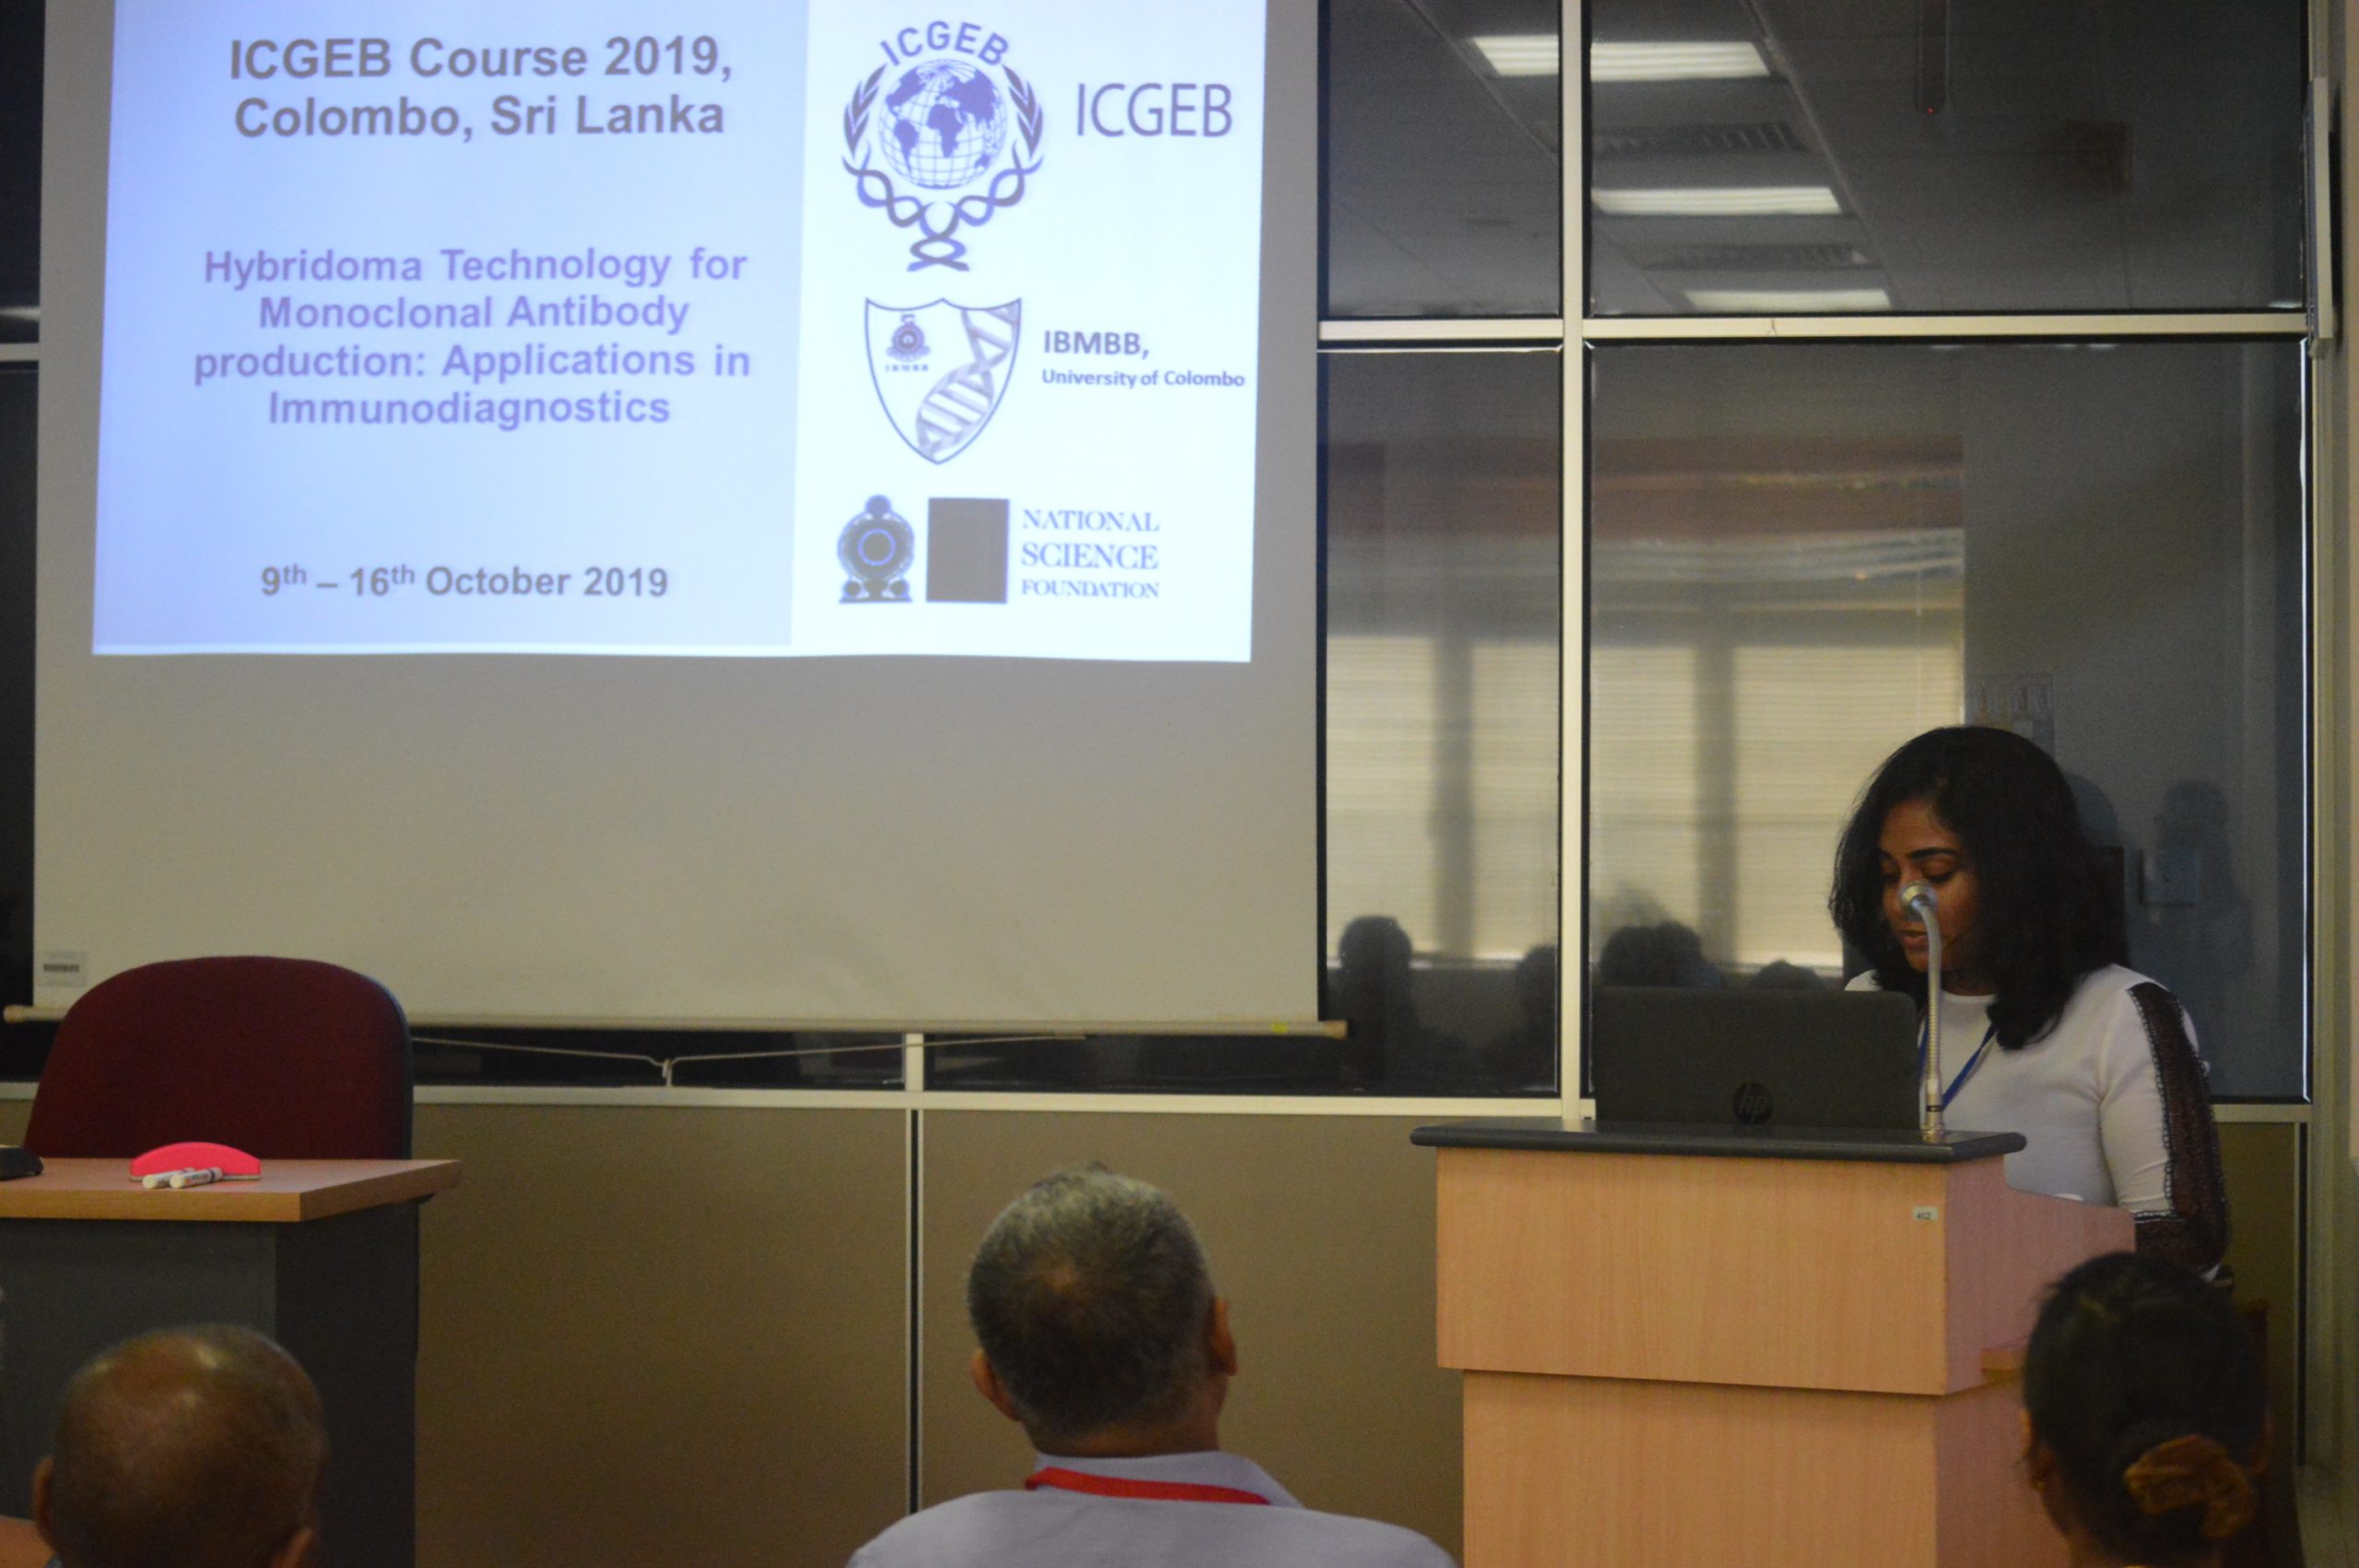 ICGEB Course 2019, Colombo, Sri Lanka 9th – 16th October 2019